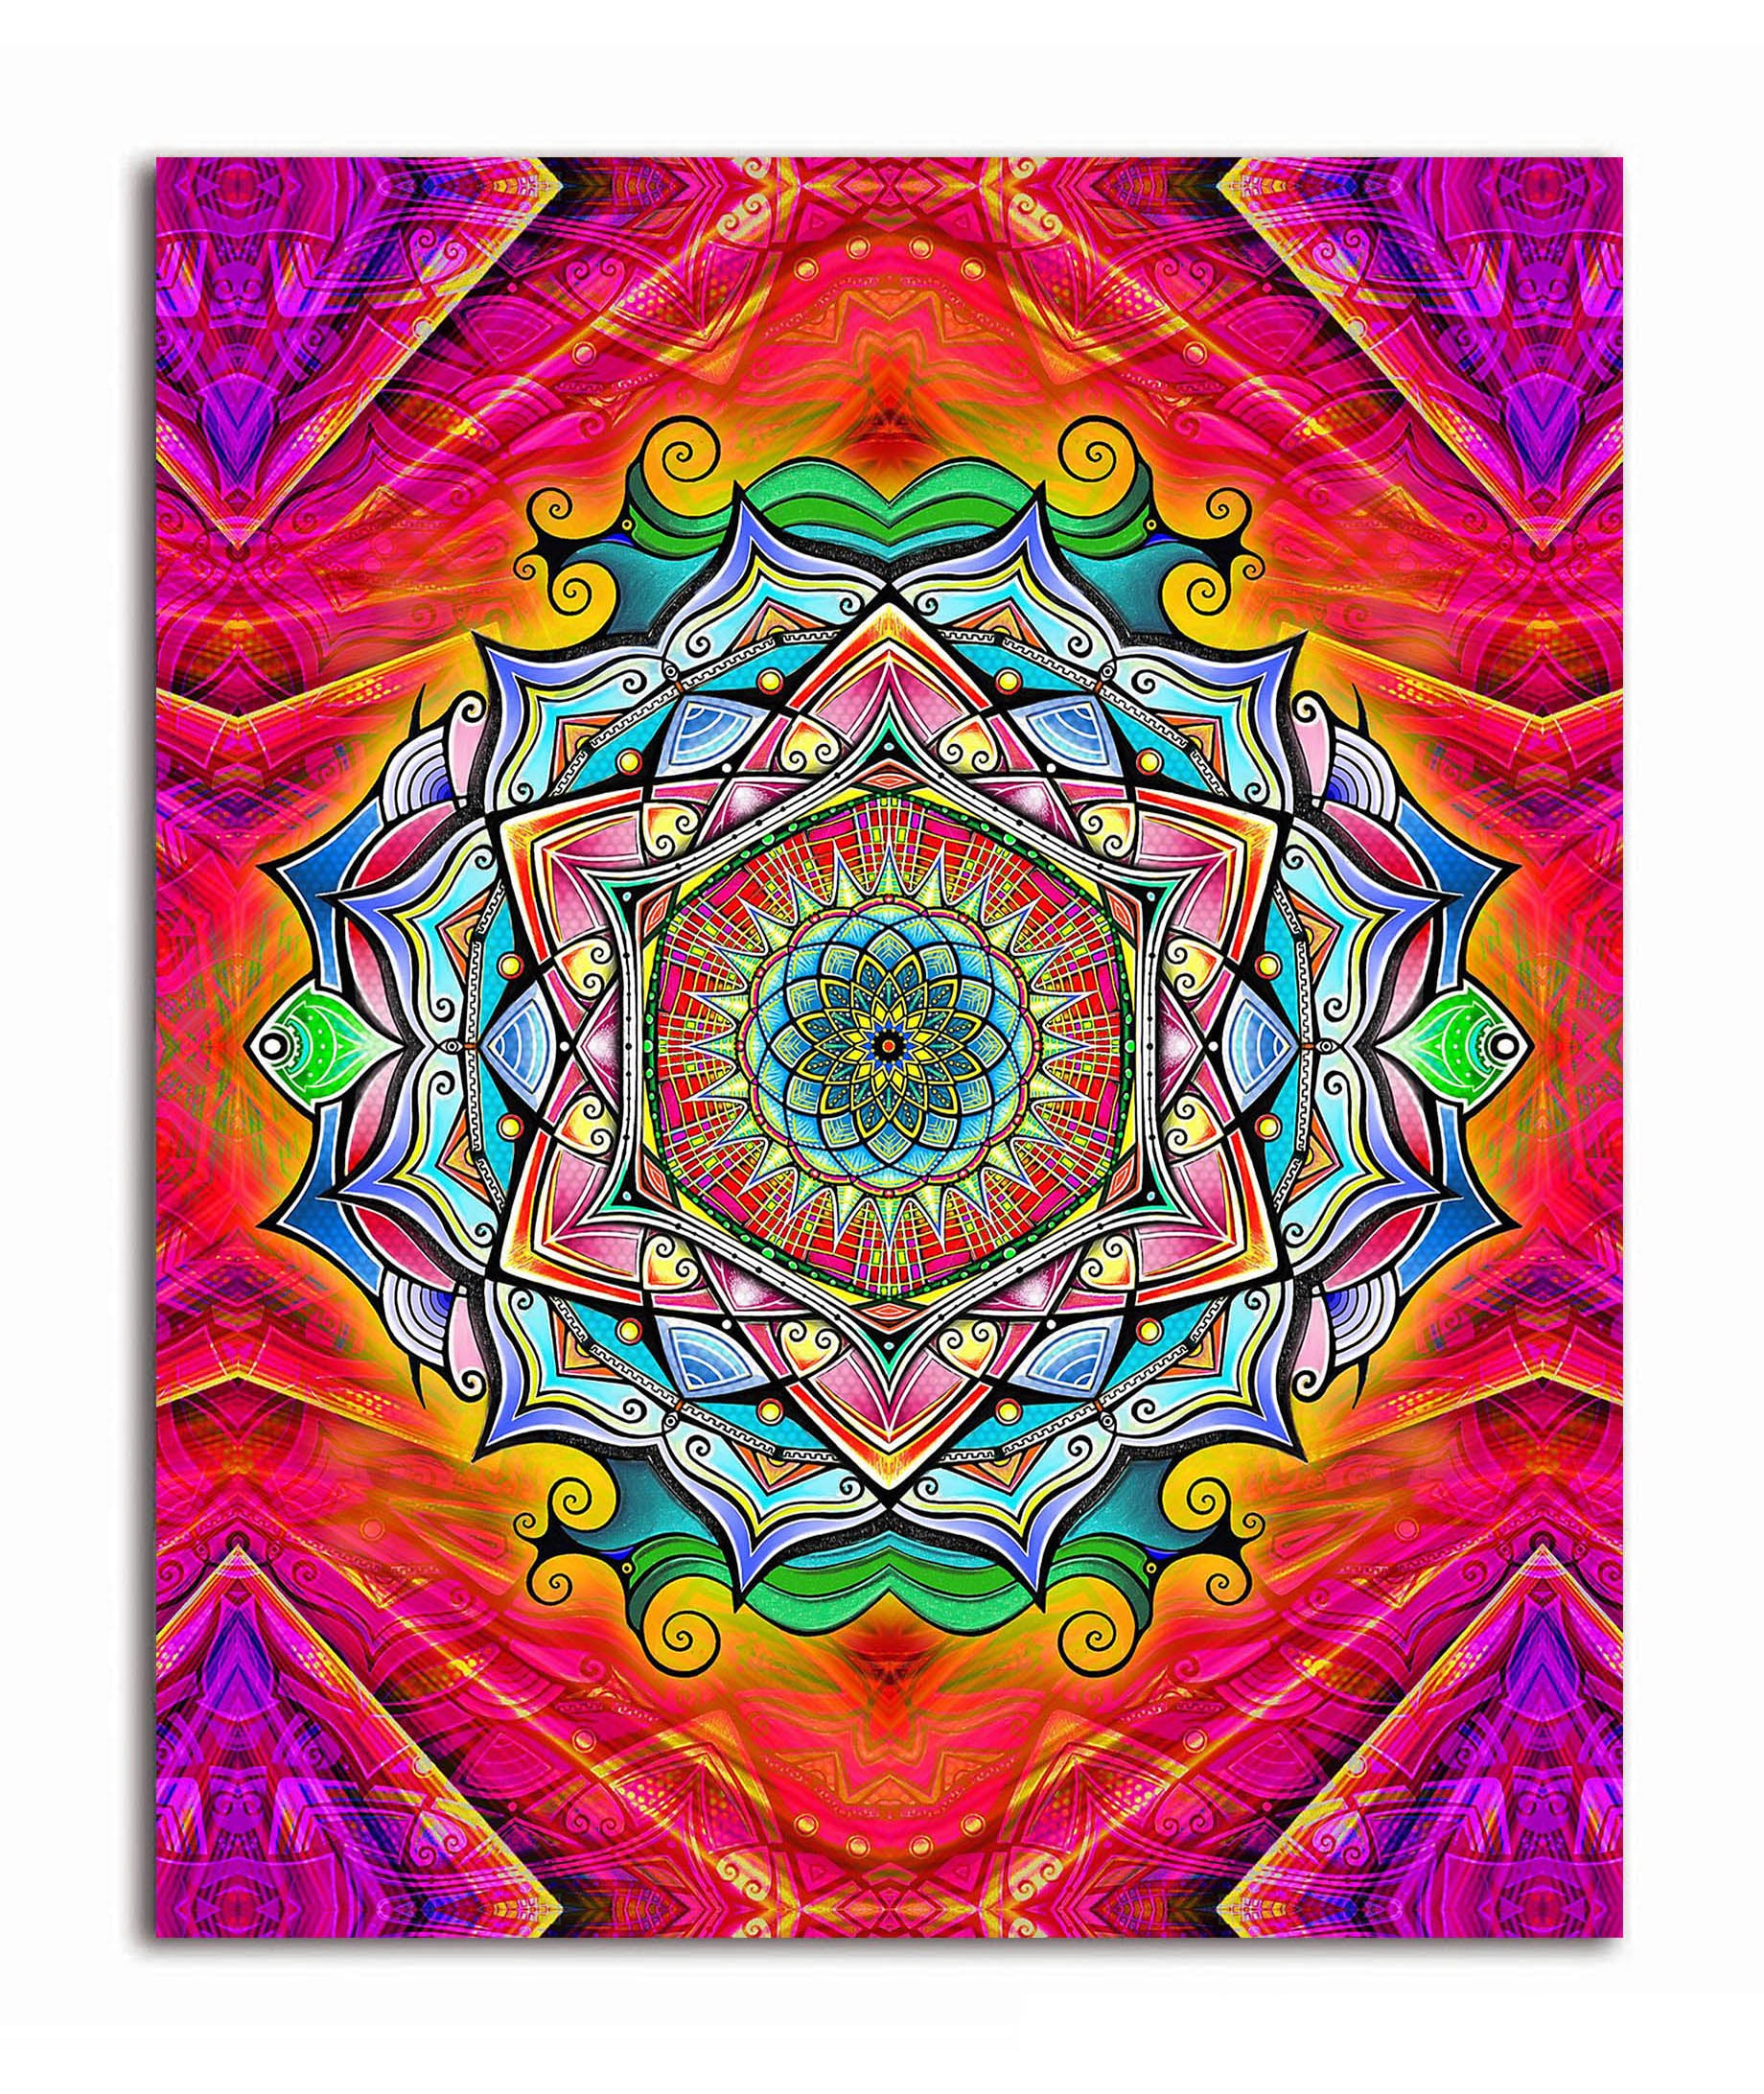 Rainbow Mandala - Unframed Canvas Painting